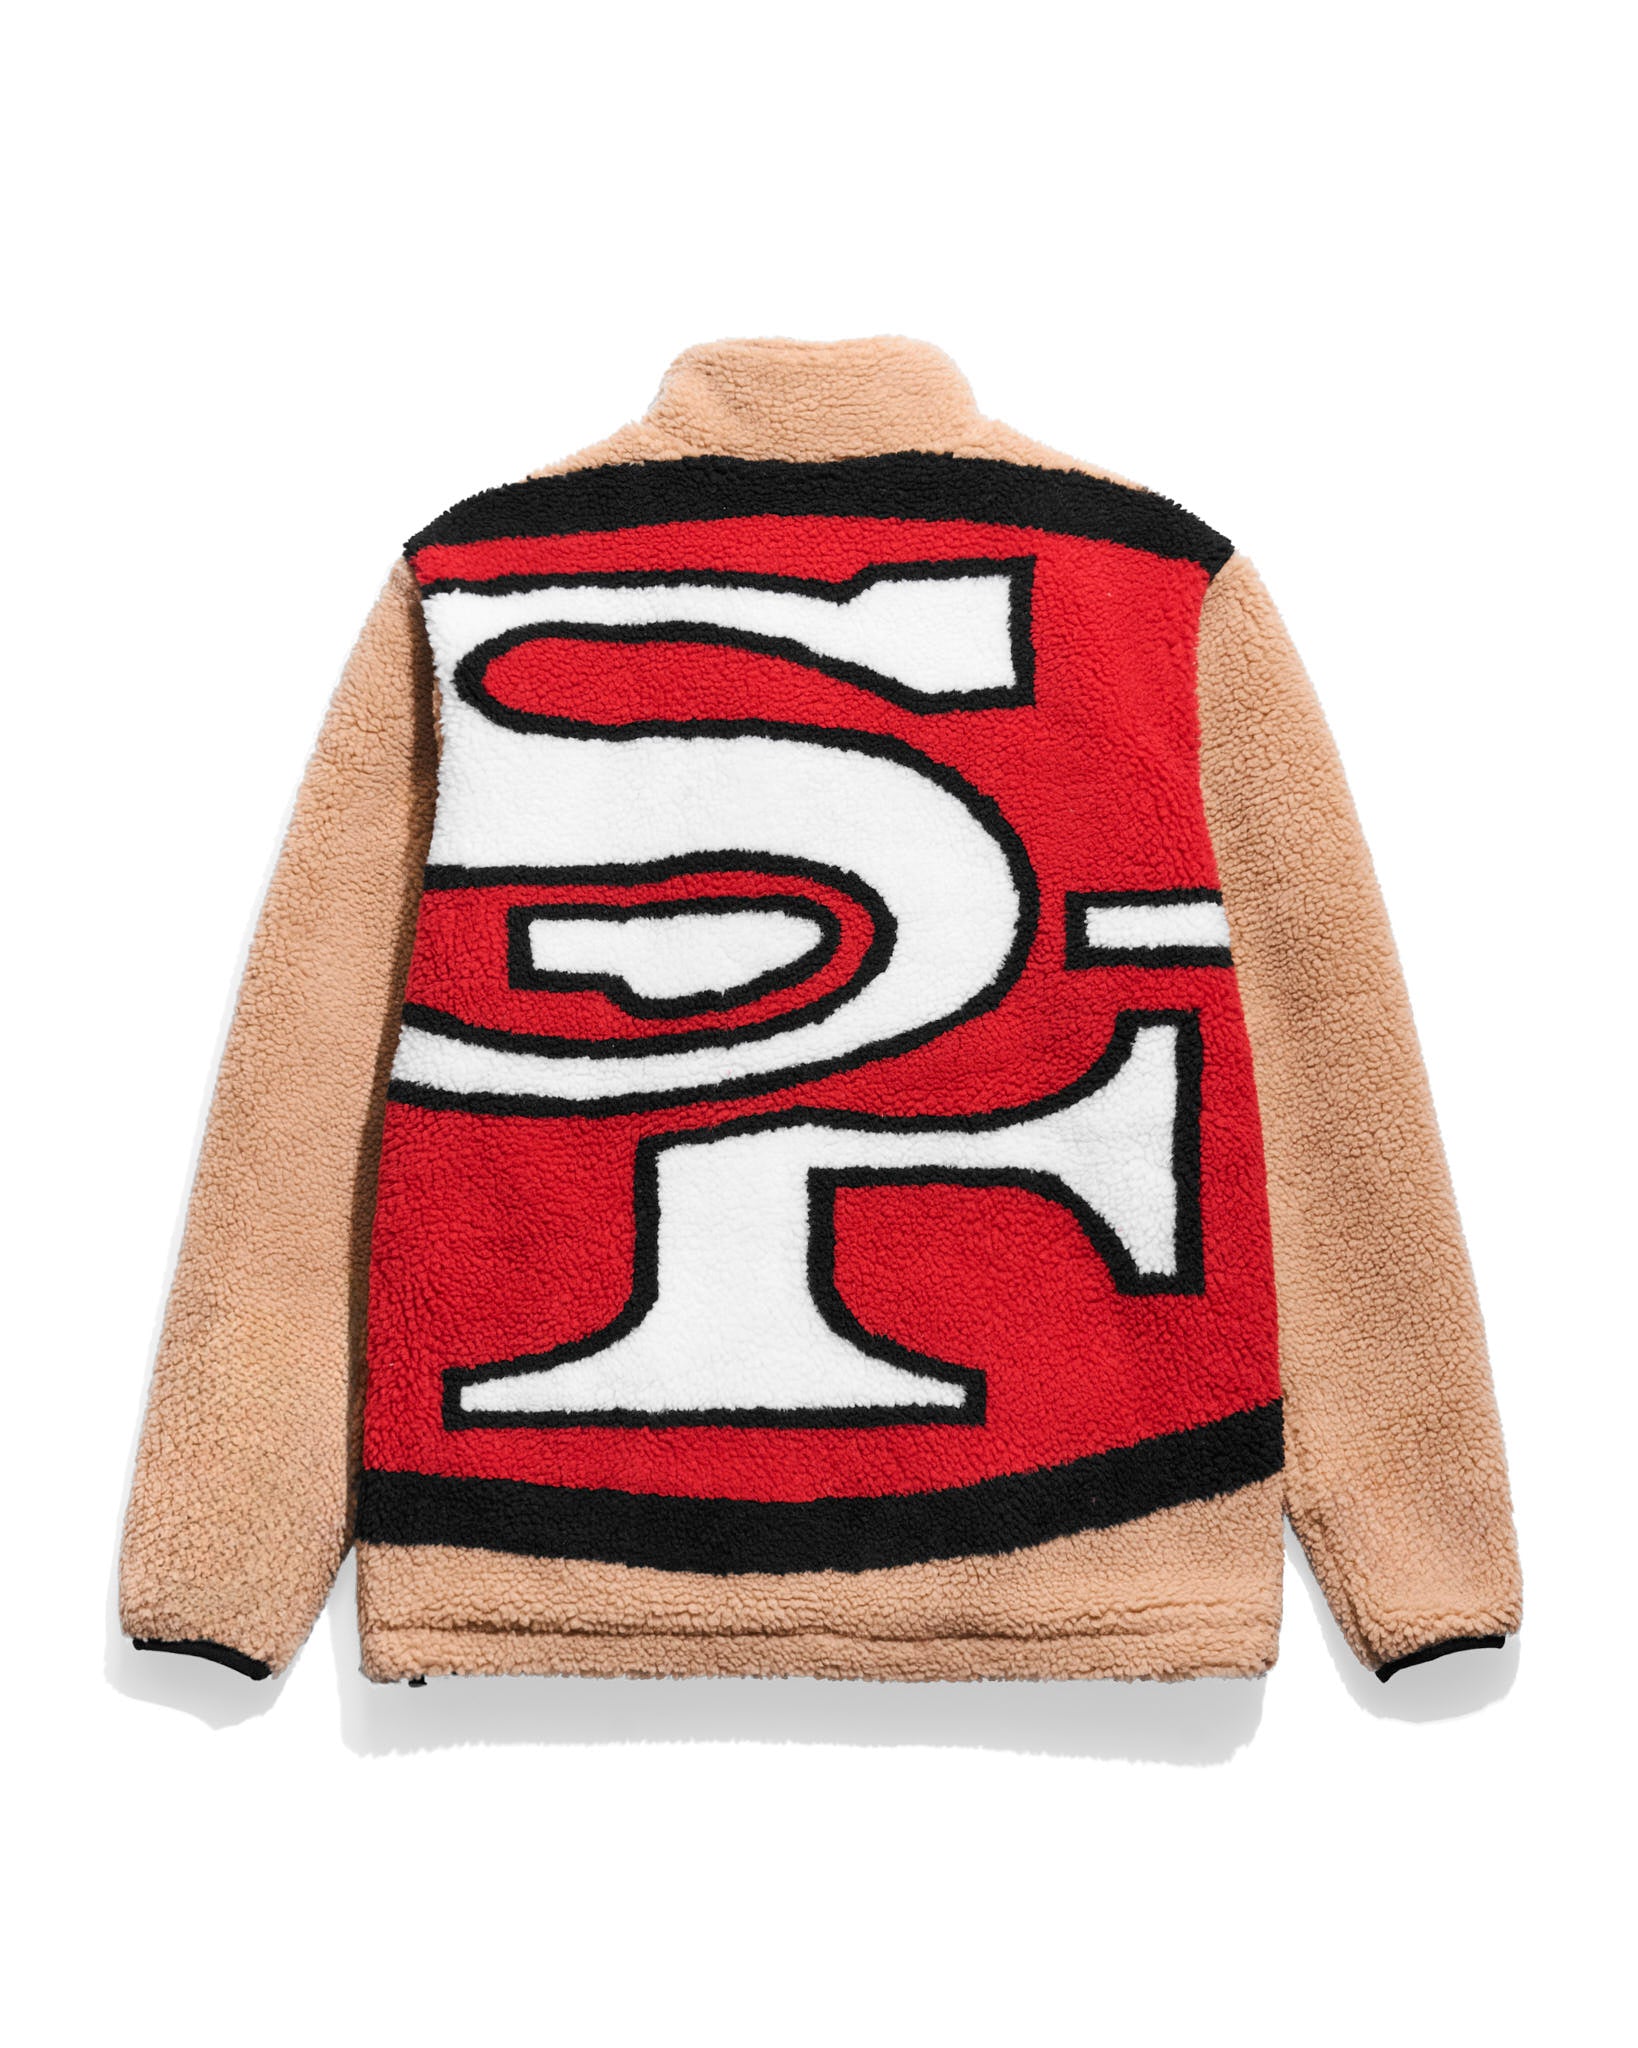 San Francisco 49ers Sherpa Jacket